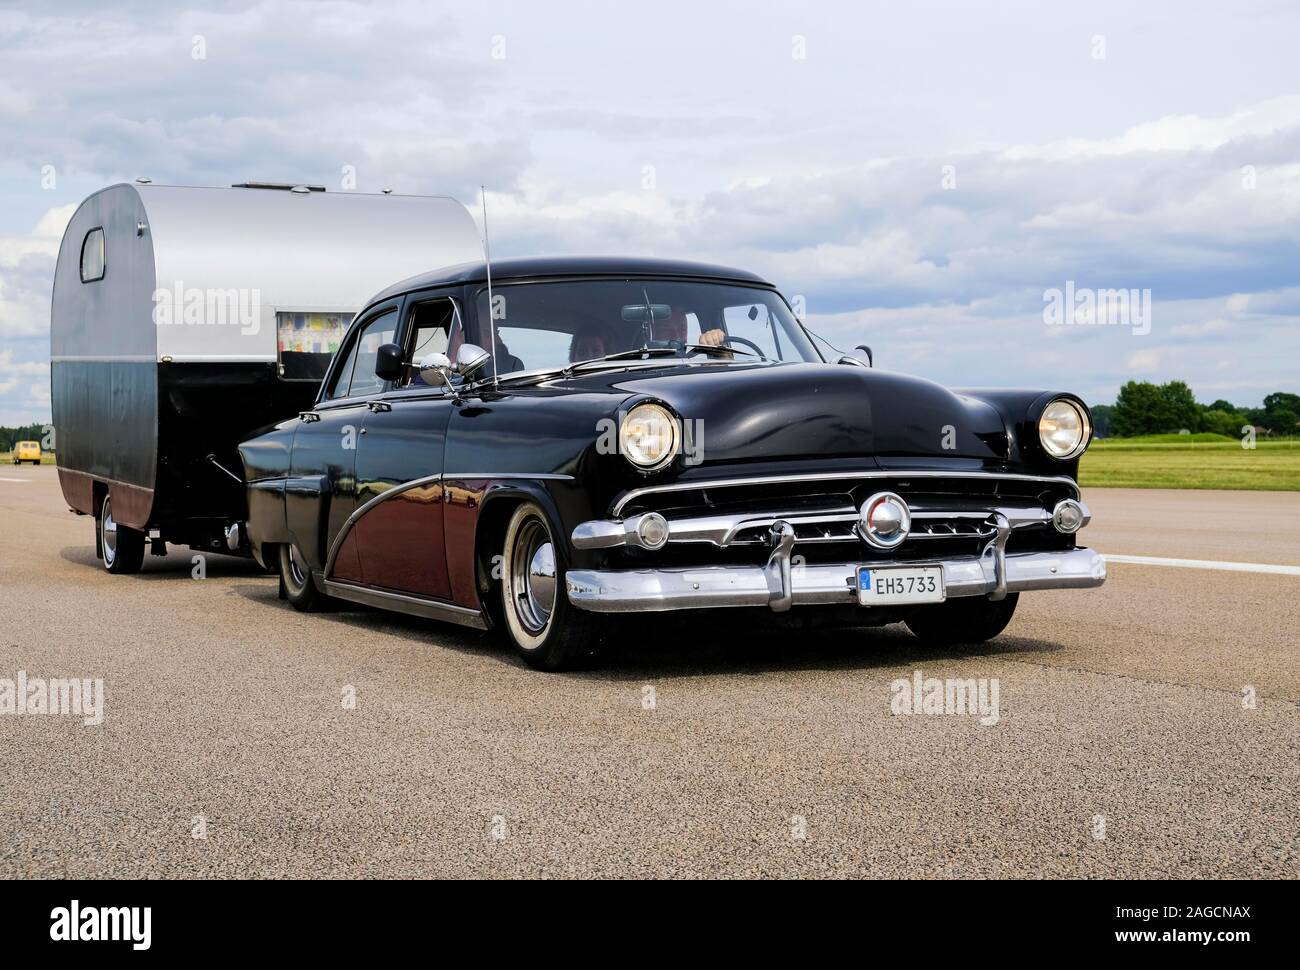 American vintage car, Ford 73A Mainline, built 1954, with retro caravan, at the vintage car meeting Powermeet 2017, Lidkoeping, Vaestra Goetaland Stock Photo